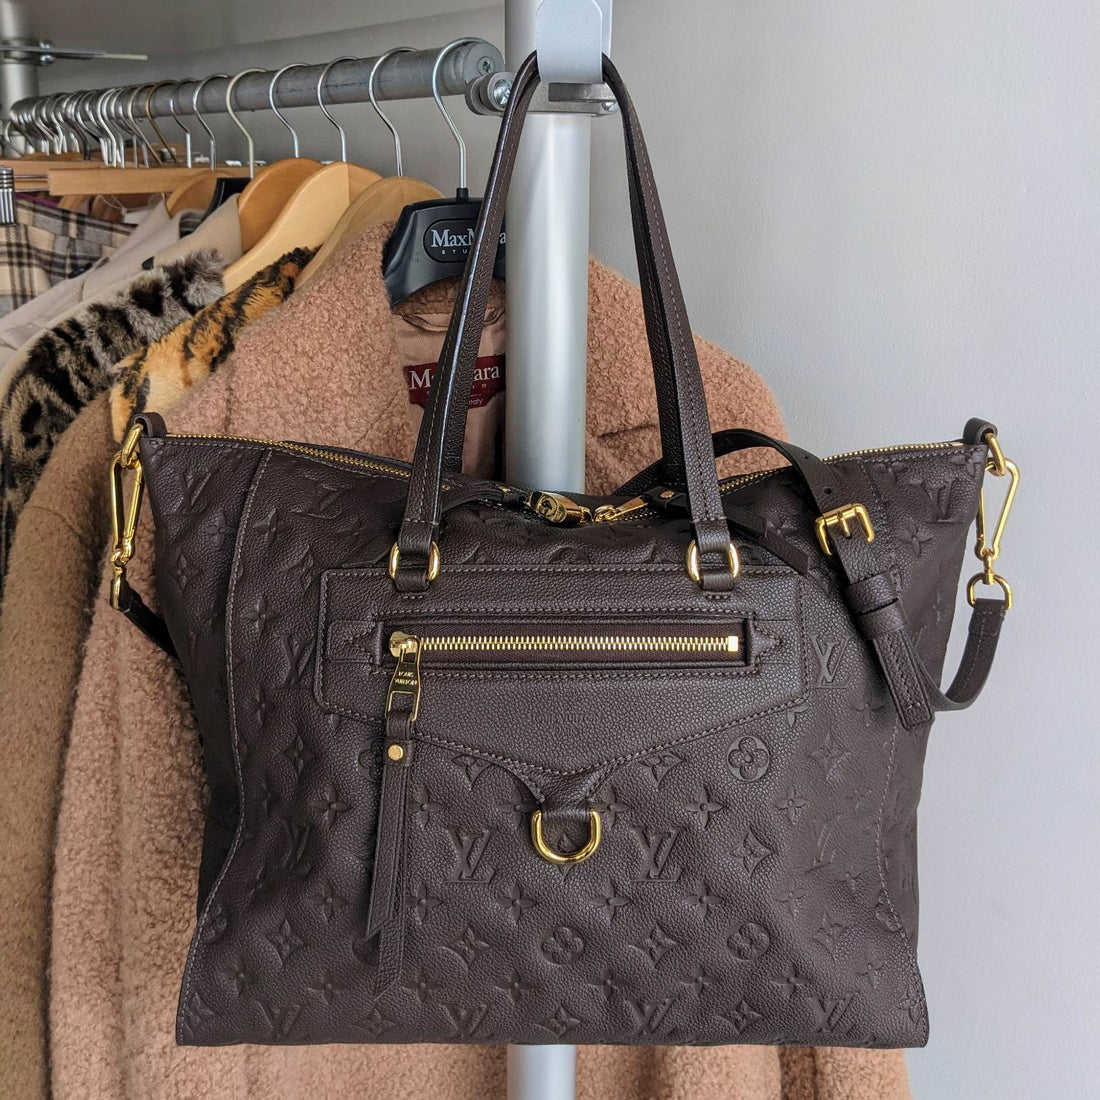 Louis Vuitton Lumineuse Shoulder bag in brown empreinte leather